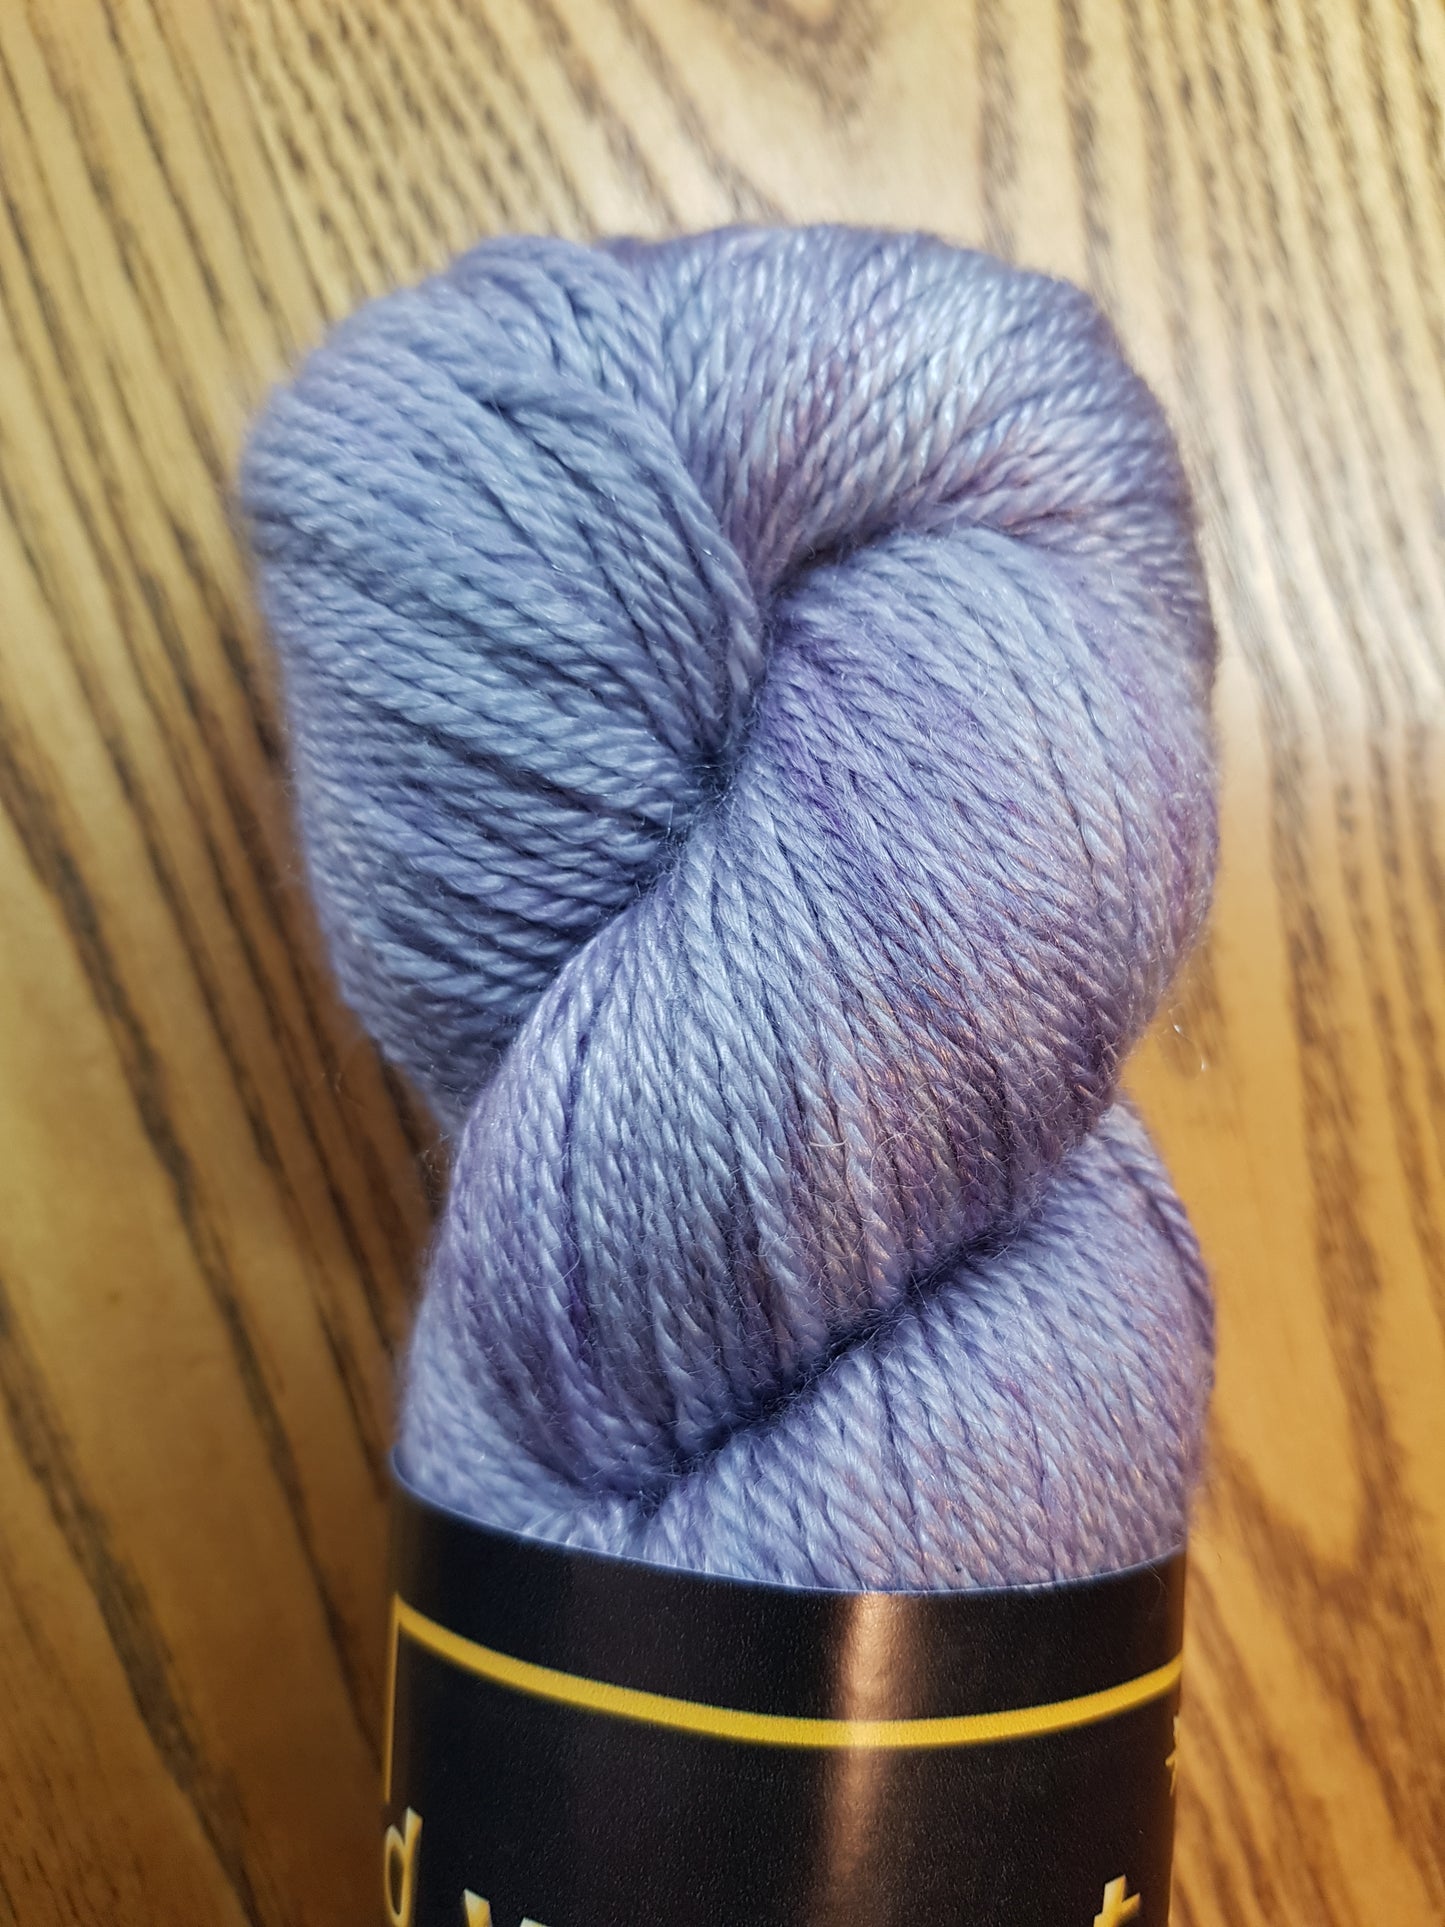 100G Merino/Tencel hand dyed luxury Yarn 4 Ply- "Lavender Haze" - SALE ITEM